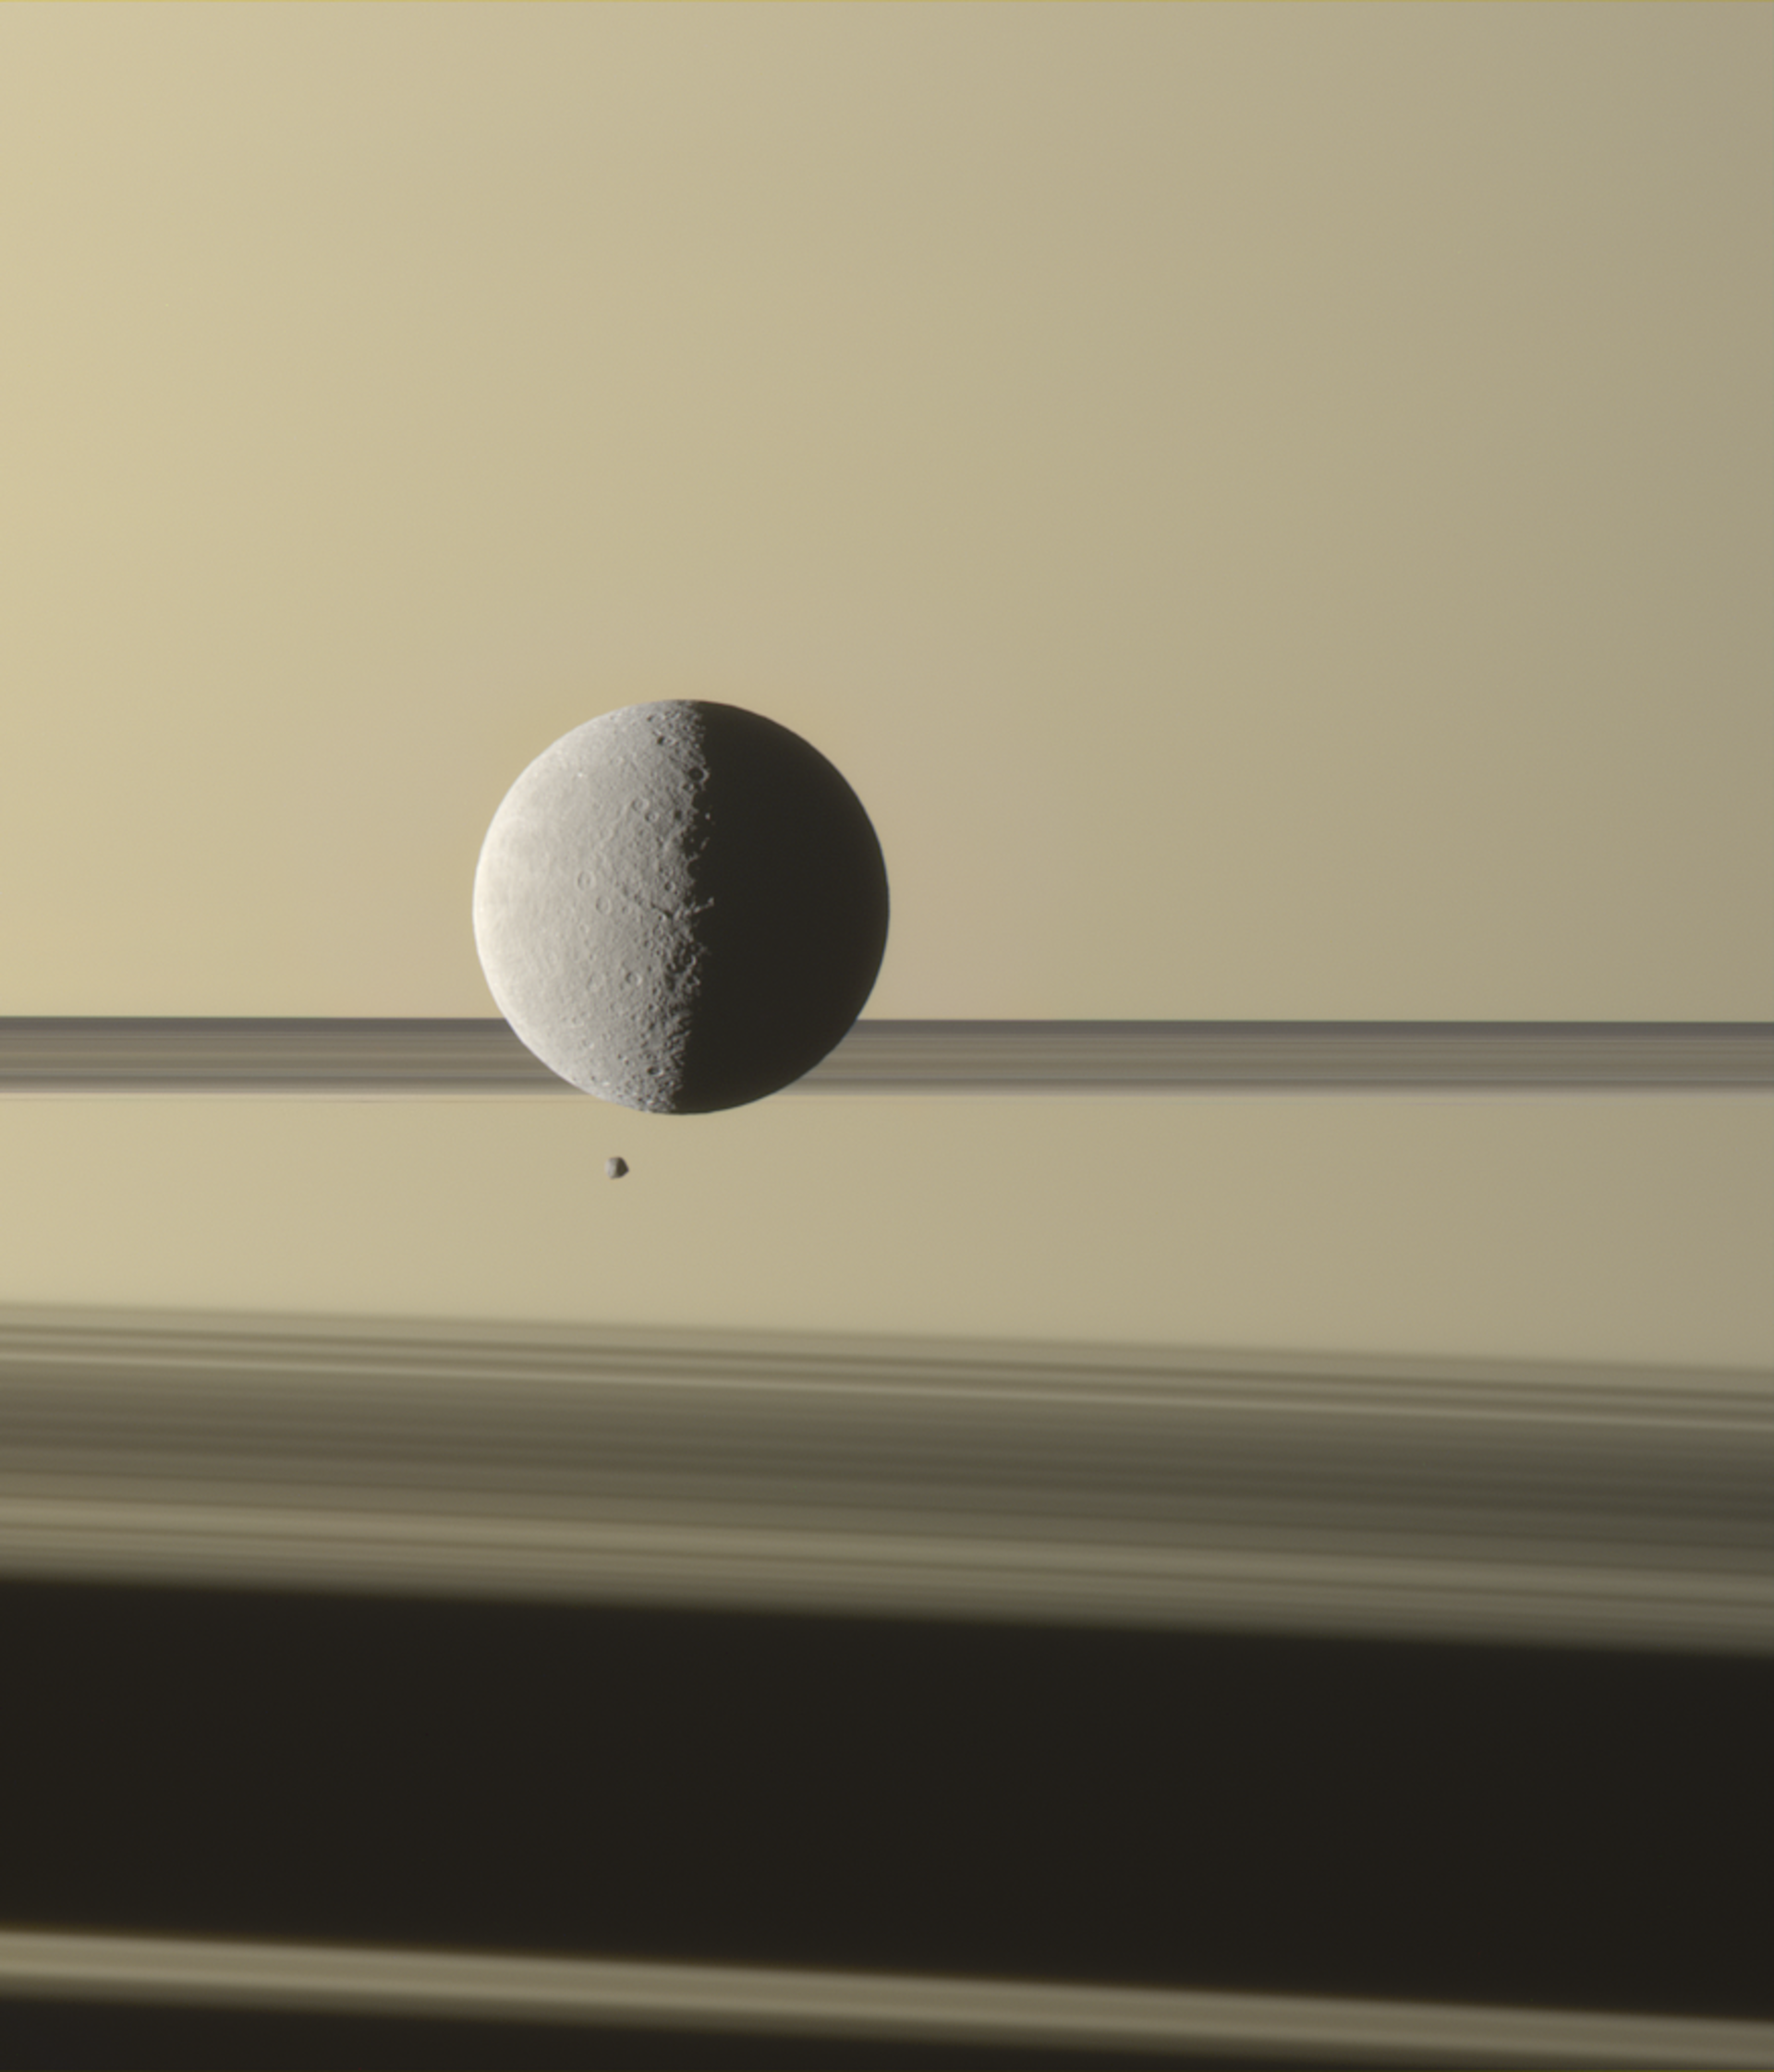 Saturn's moon Rhea, Epimetheus transiting